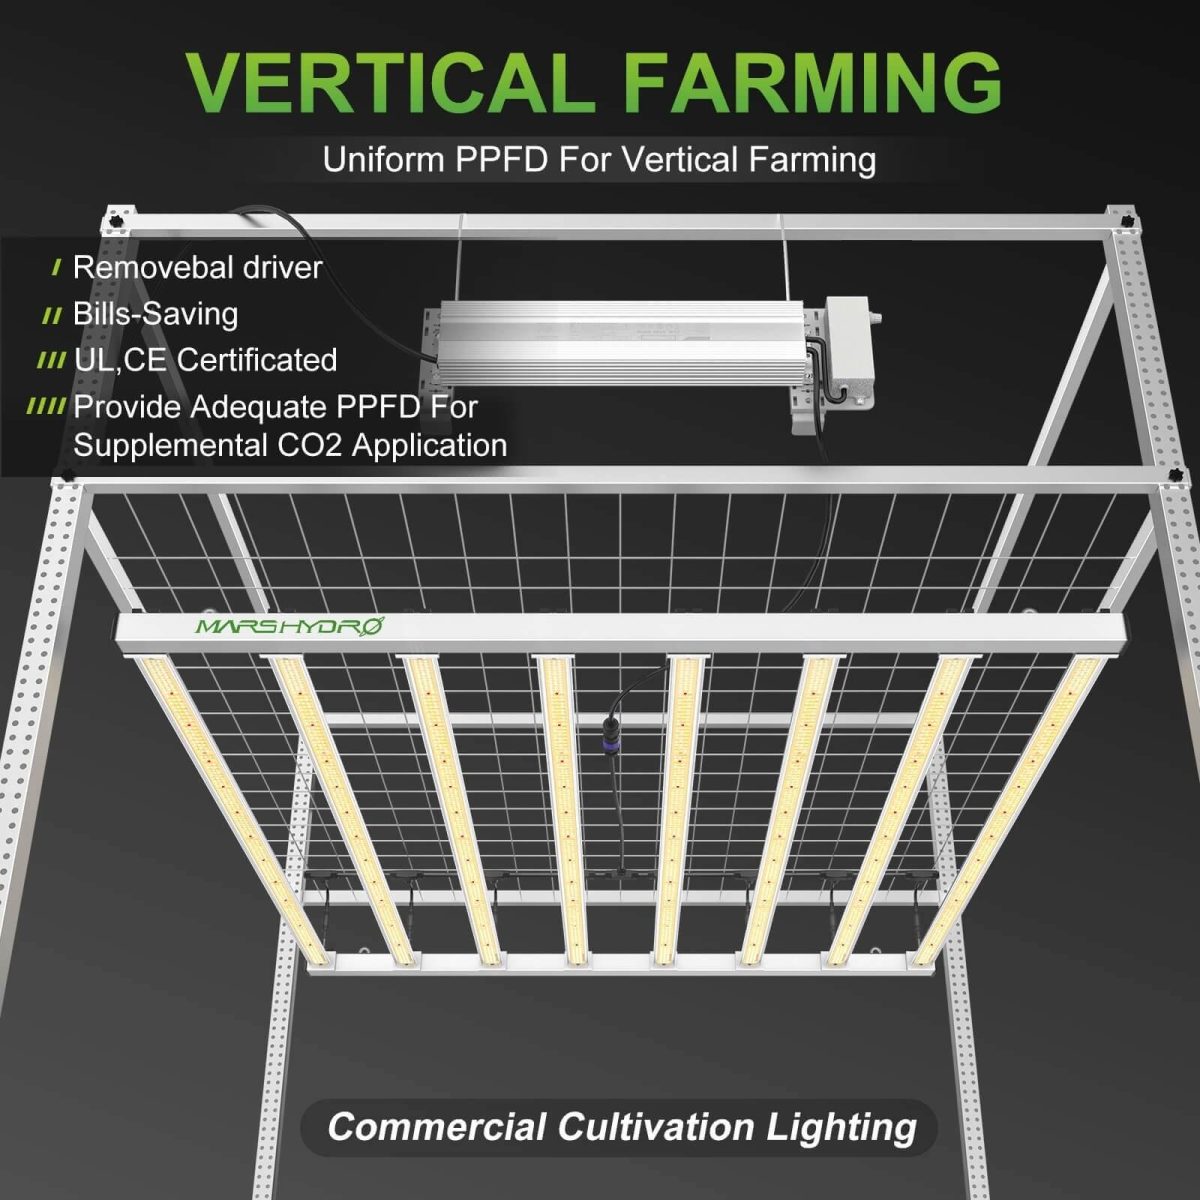 Removable bar design for uniform lighting and precise control to maximize light utilization.